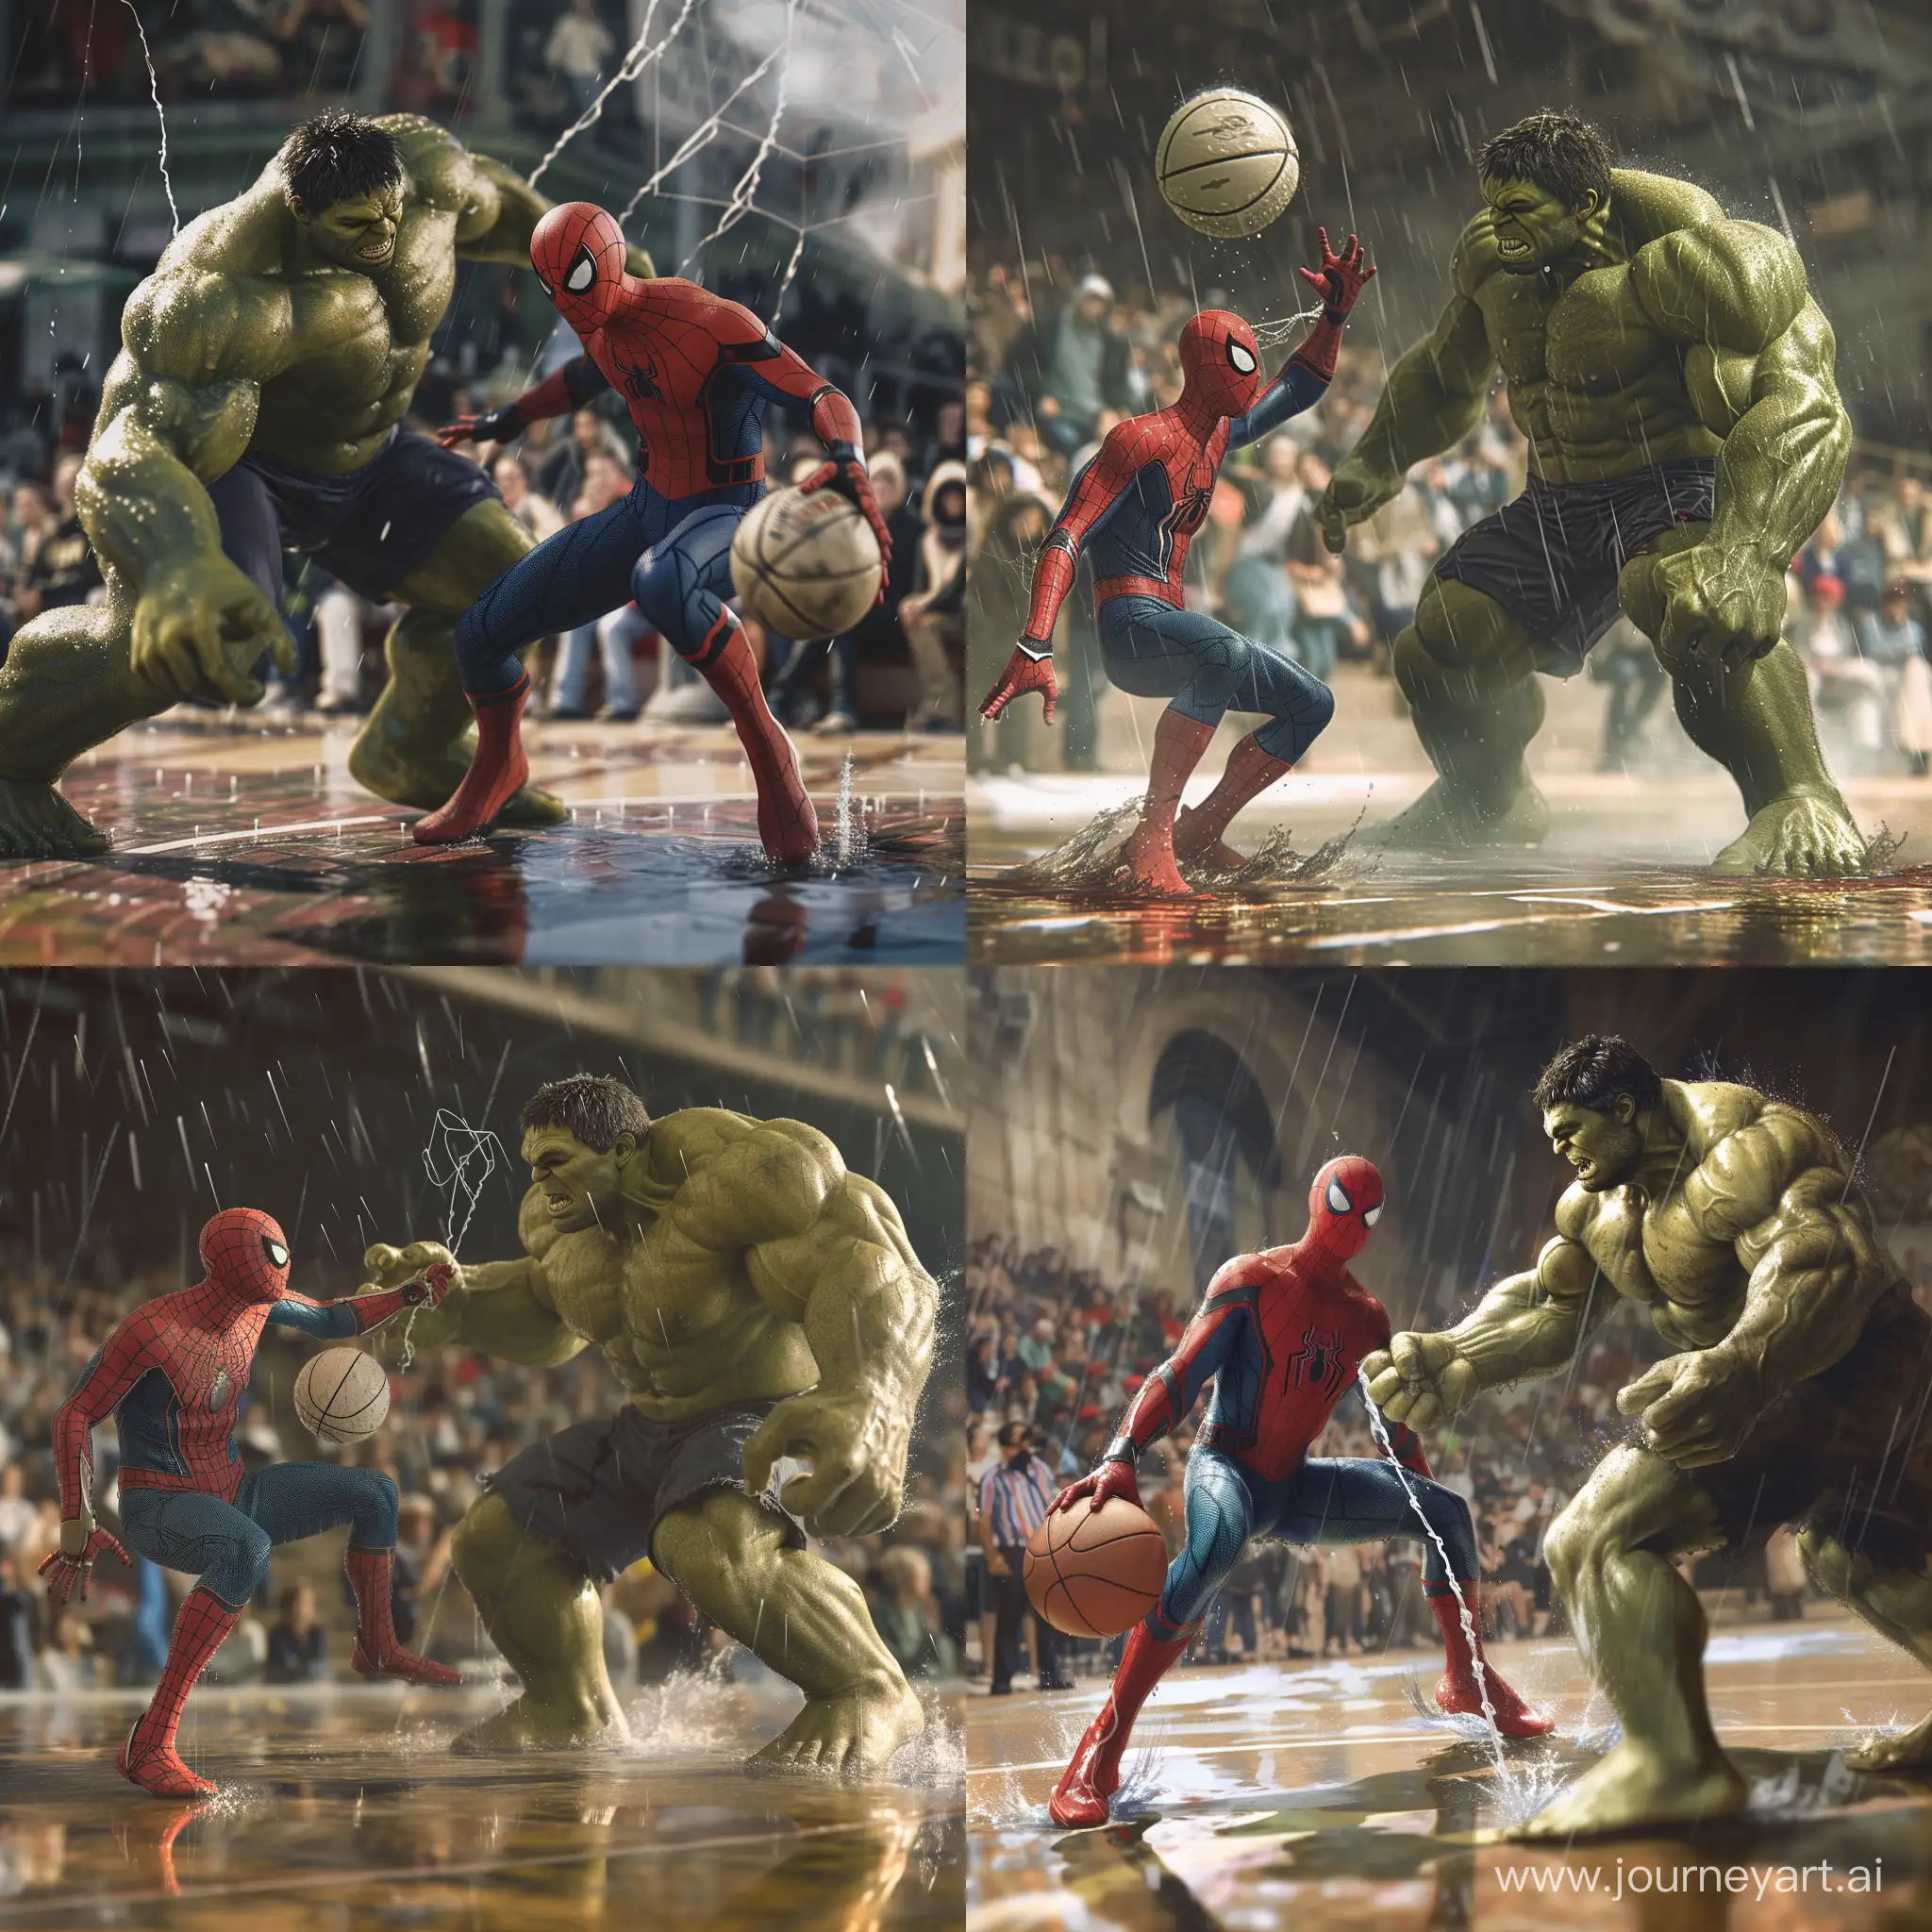 Marvel-Superheroes-SpiderMan-and-Hulk-Power-Ball-Game-in-Rain